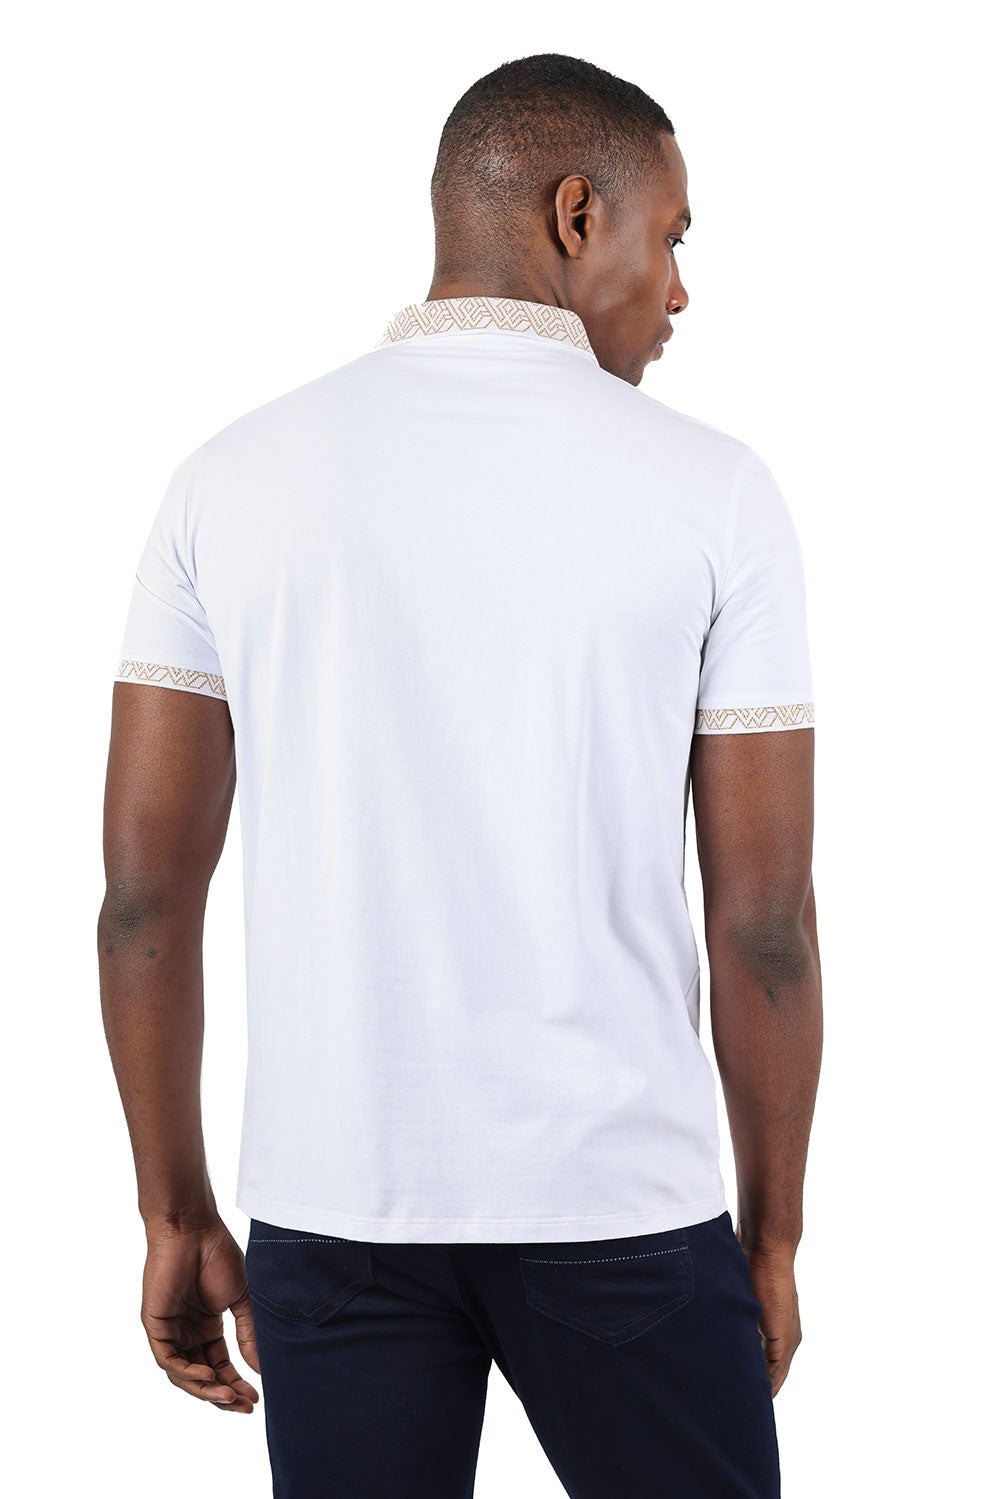 Barabas Men's Collar Pattern Short Sleeve Solid Color Shirts 3P01 White